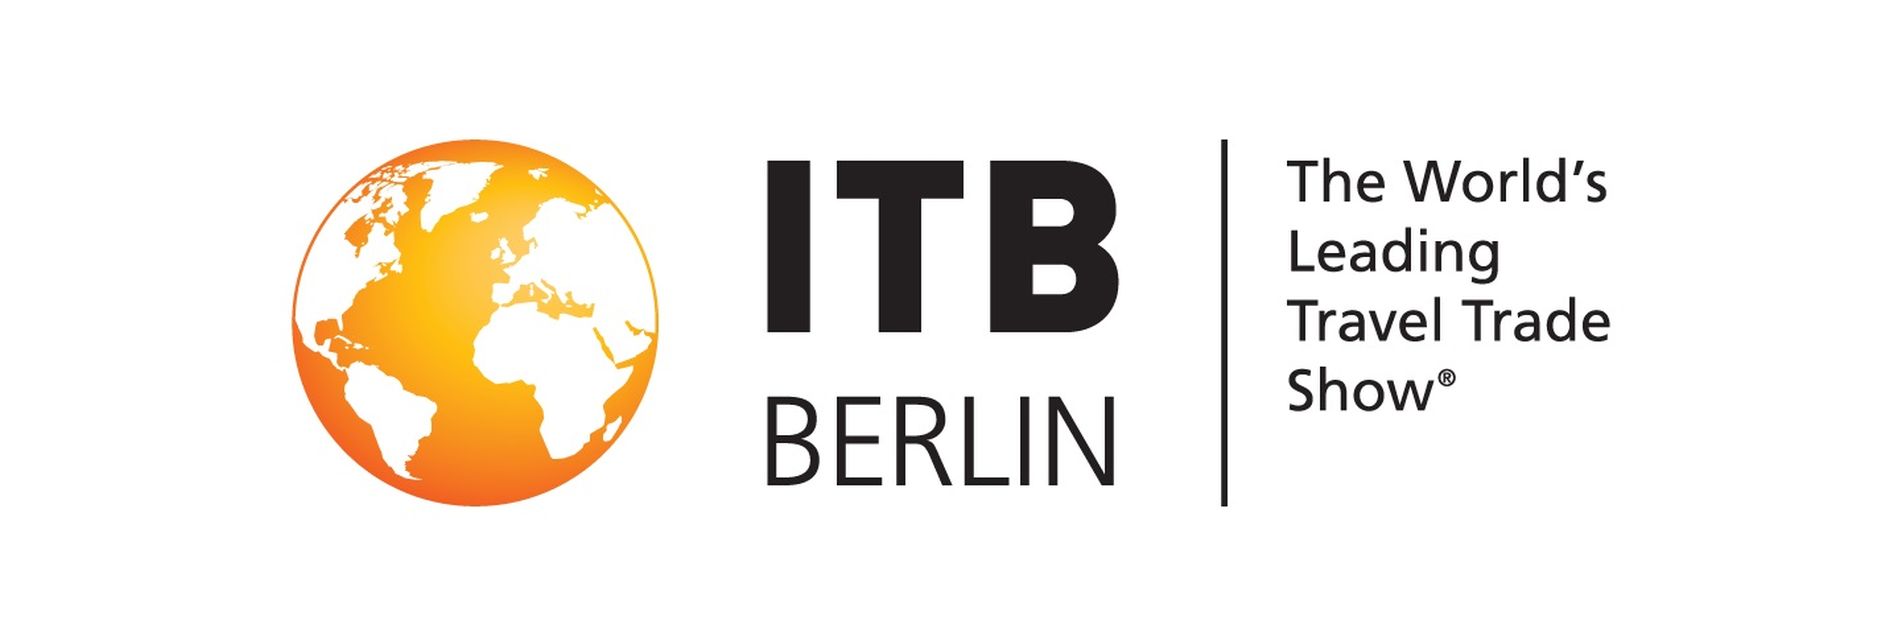 itb-berlin2.jpg